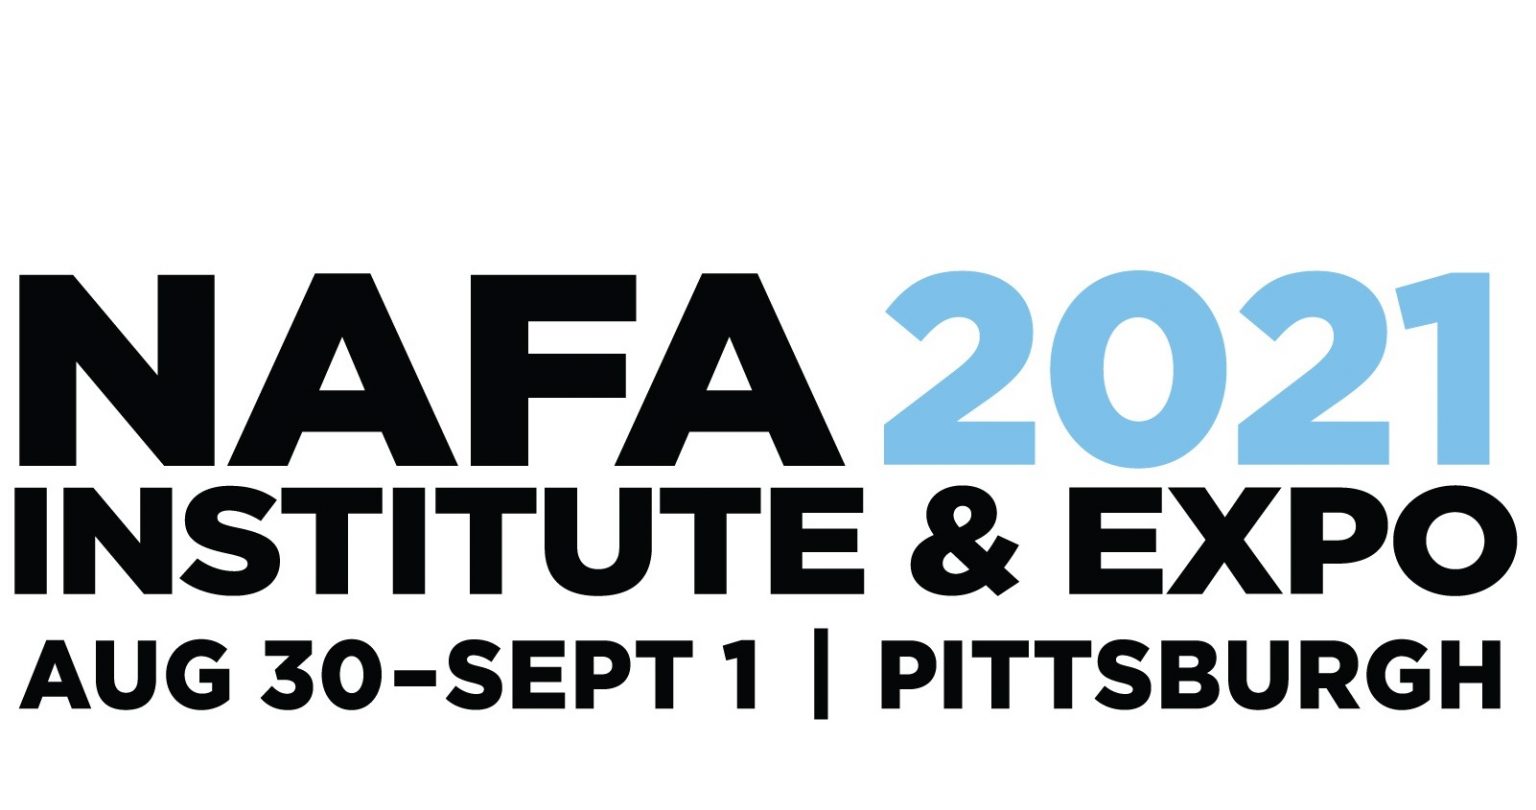 NAFA 2021 Institute & Expo reschedule to August